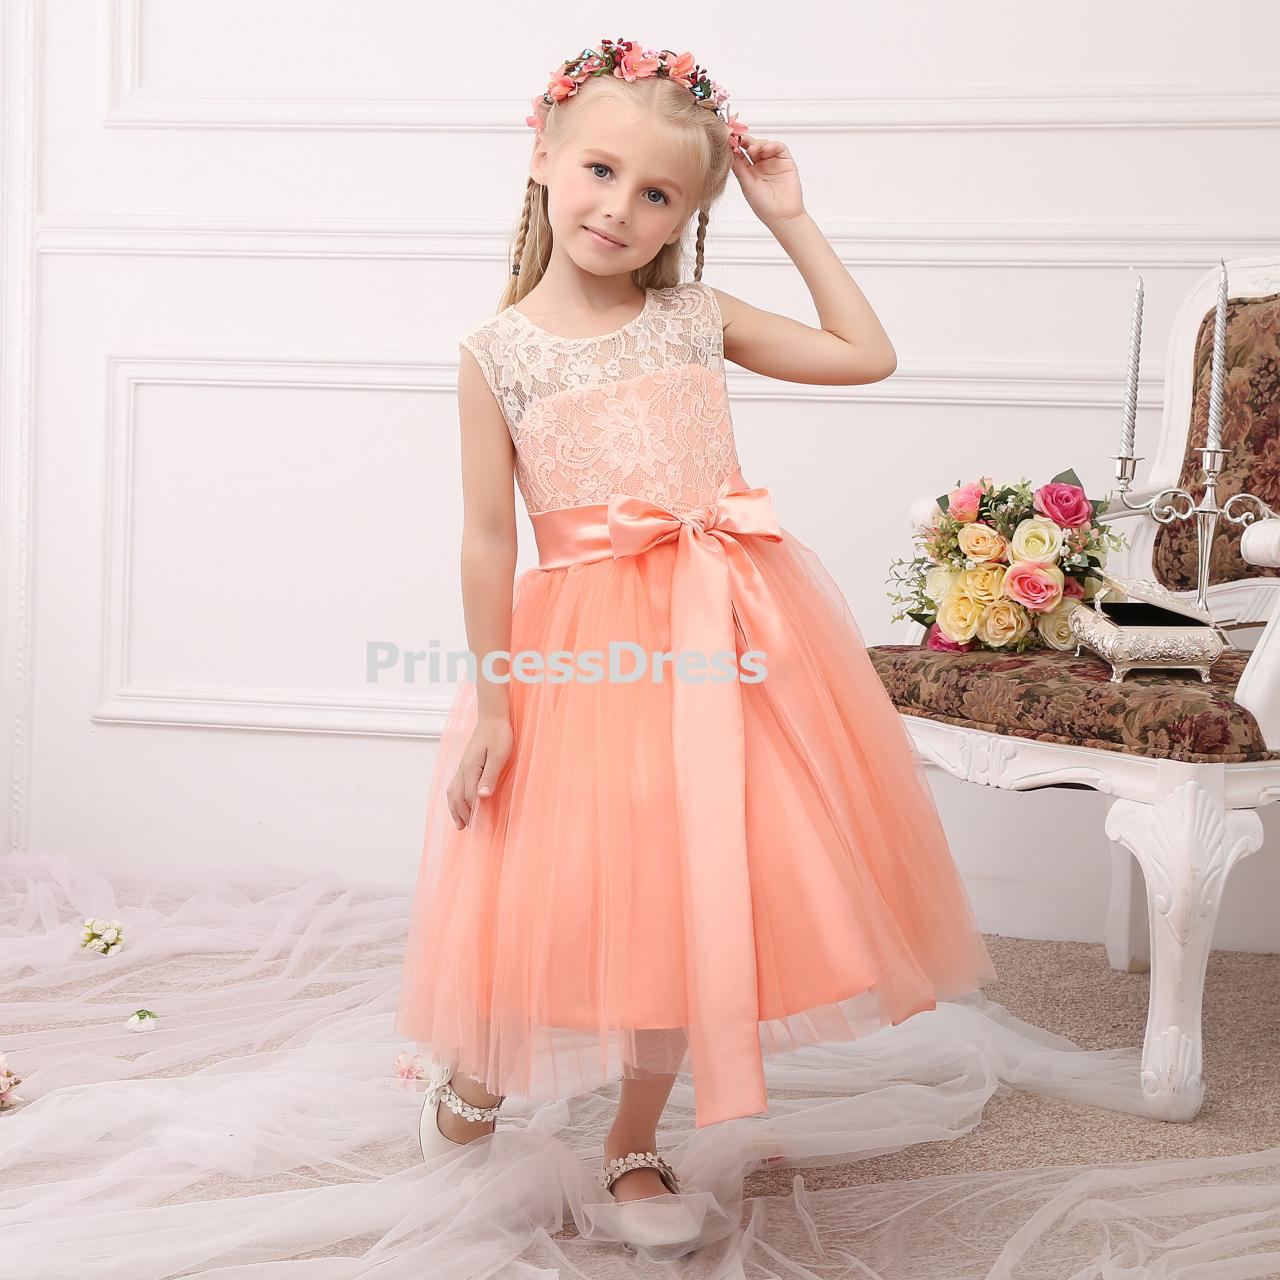 Lace Bodice Tulle Flower Girl Dress With Bow,tea-length Flower Girl Dress ,orange Girl Dress For Wedding,custom Made Flower Girl Dresses